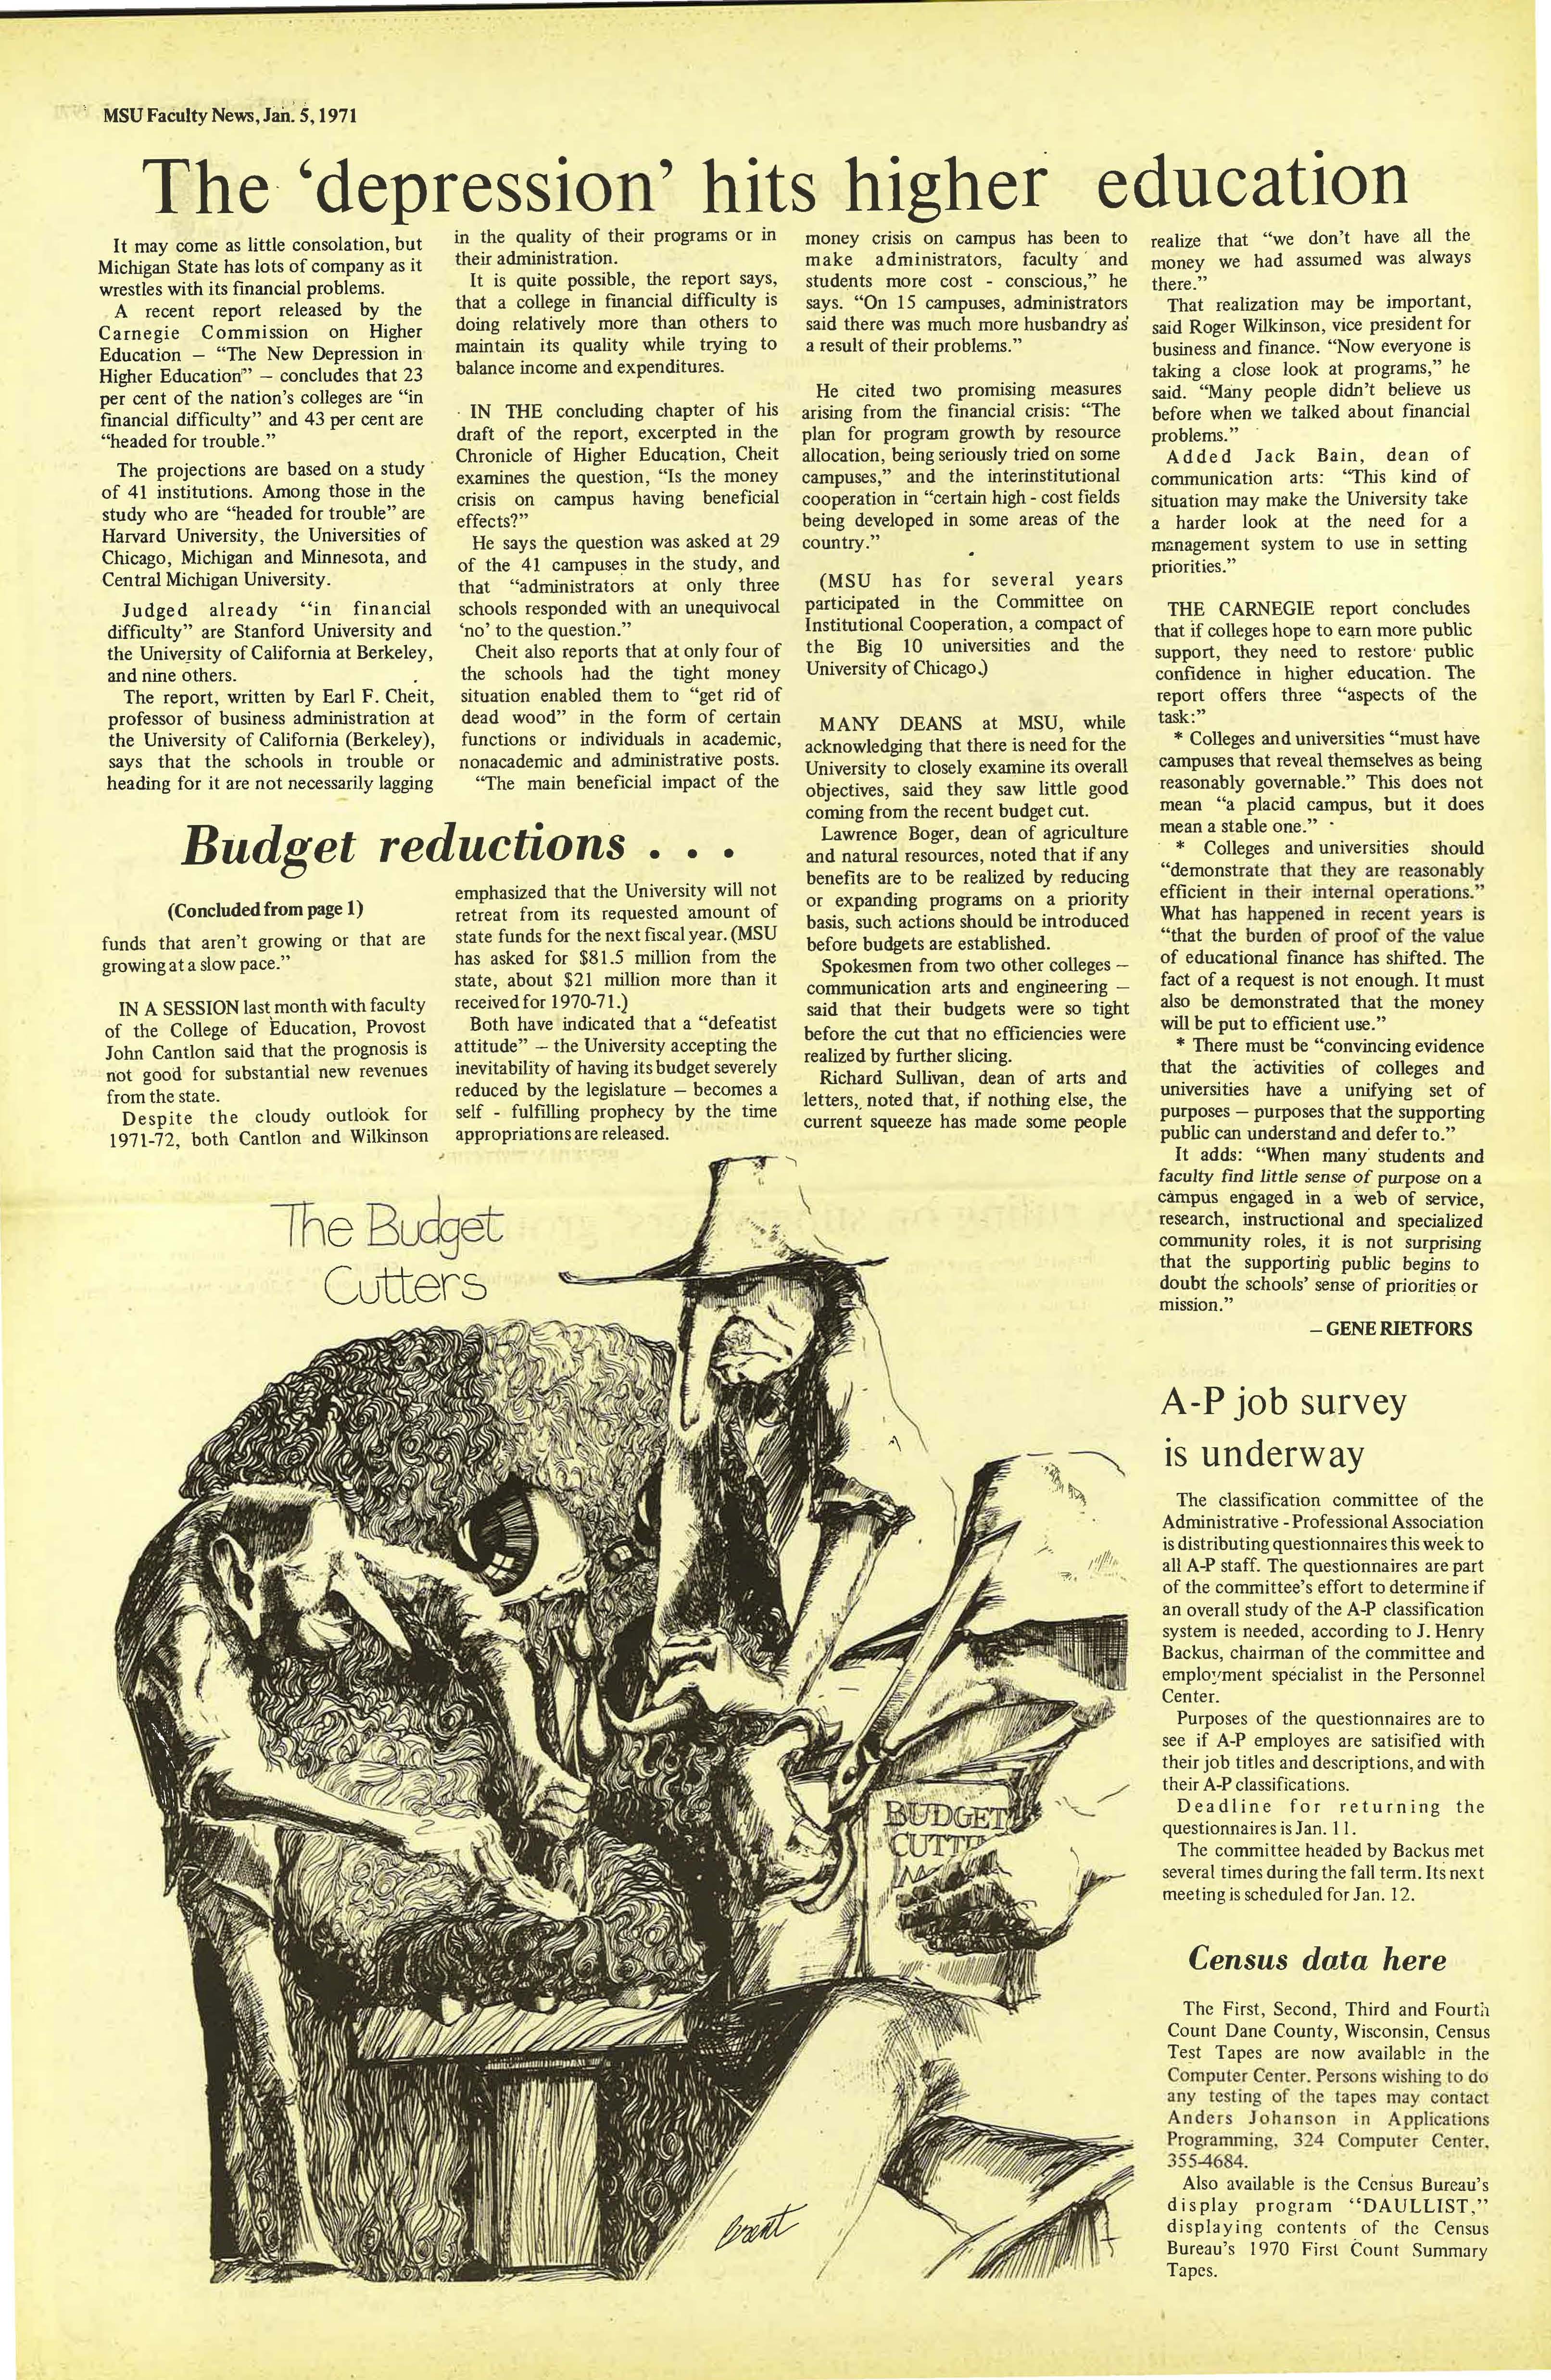 MSU News Bulletin, vol. 3, No. 3, October 7, 1971